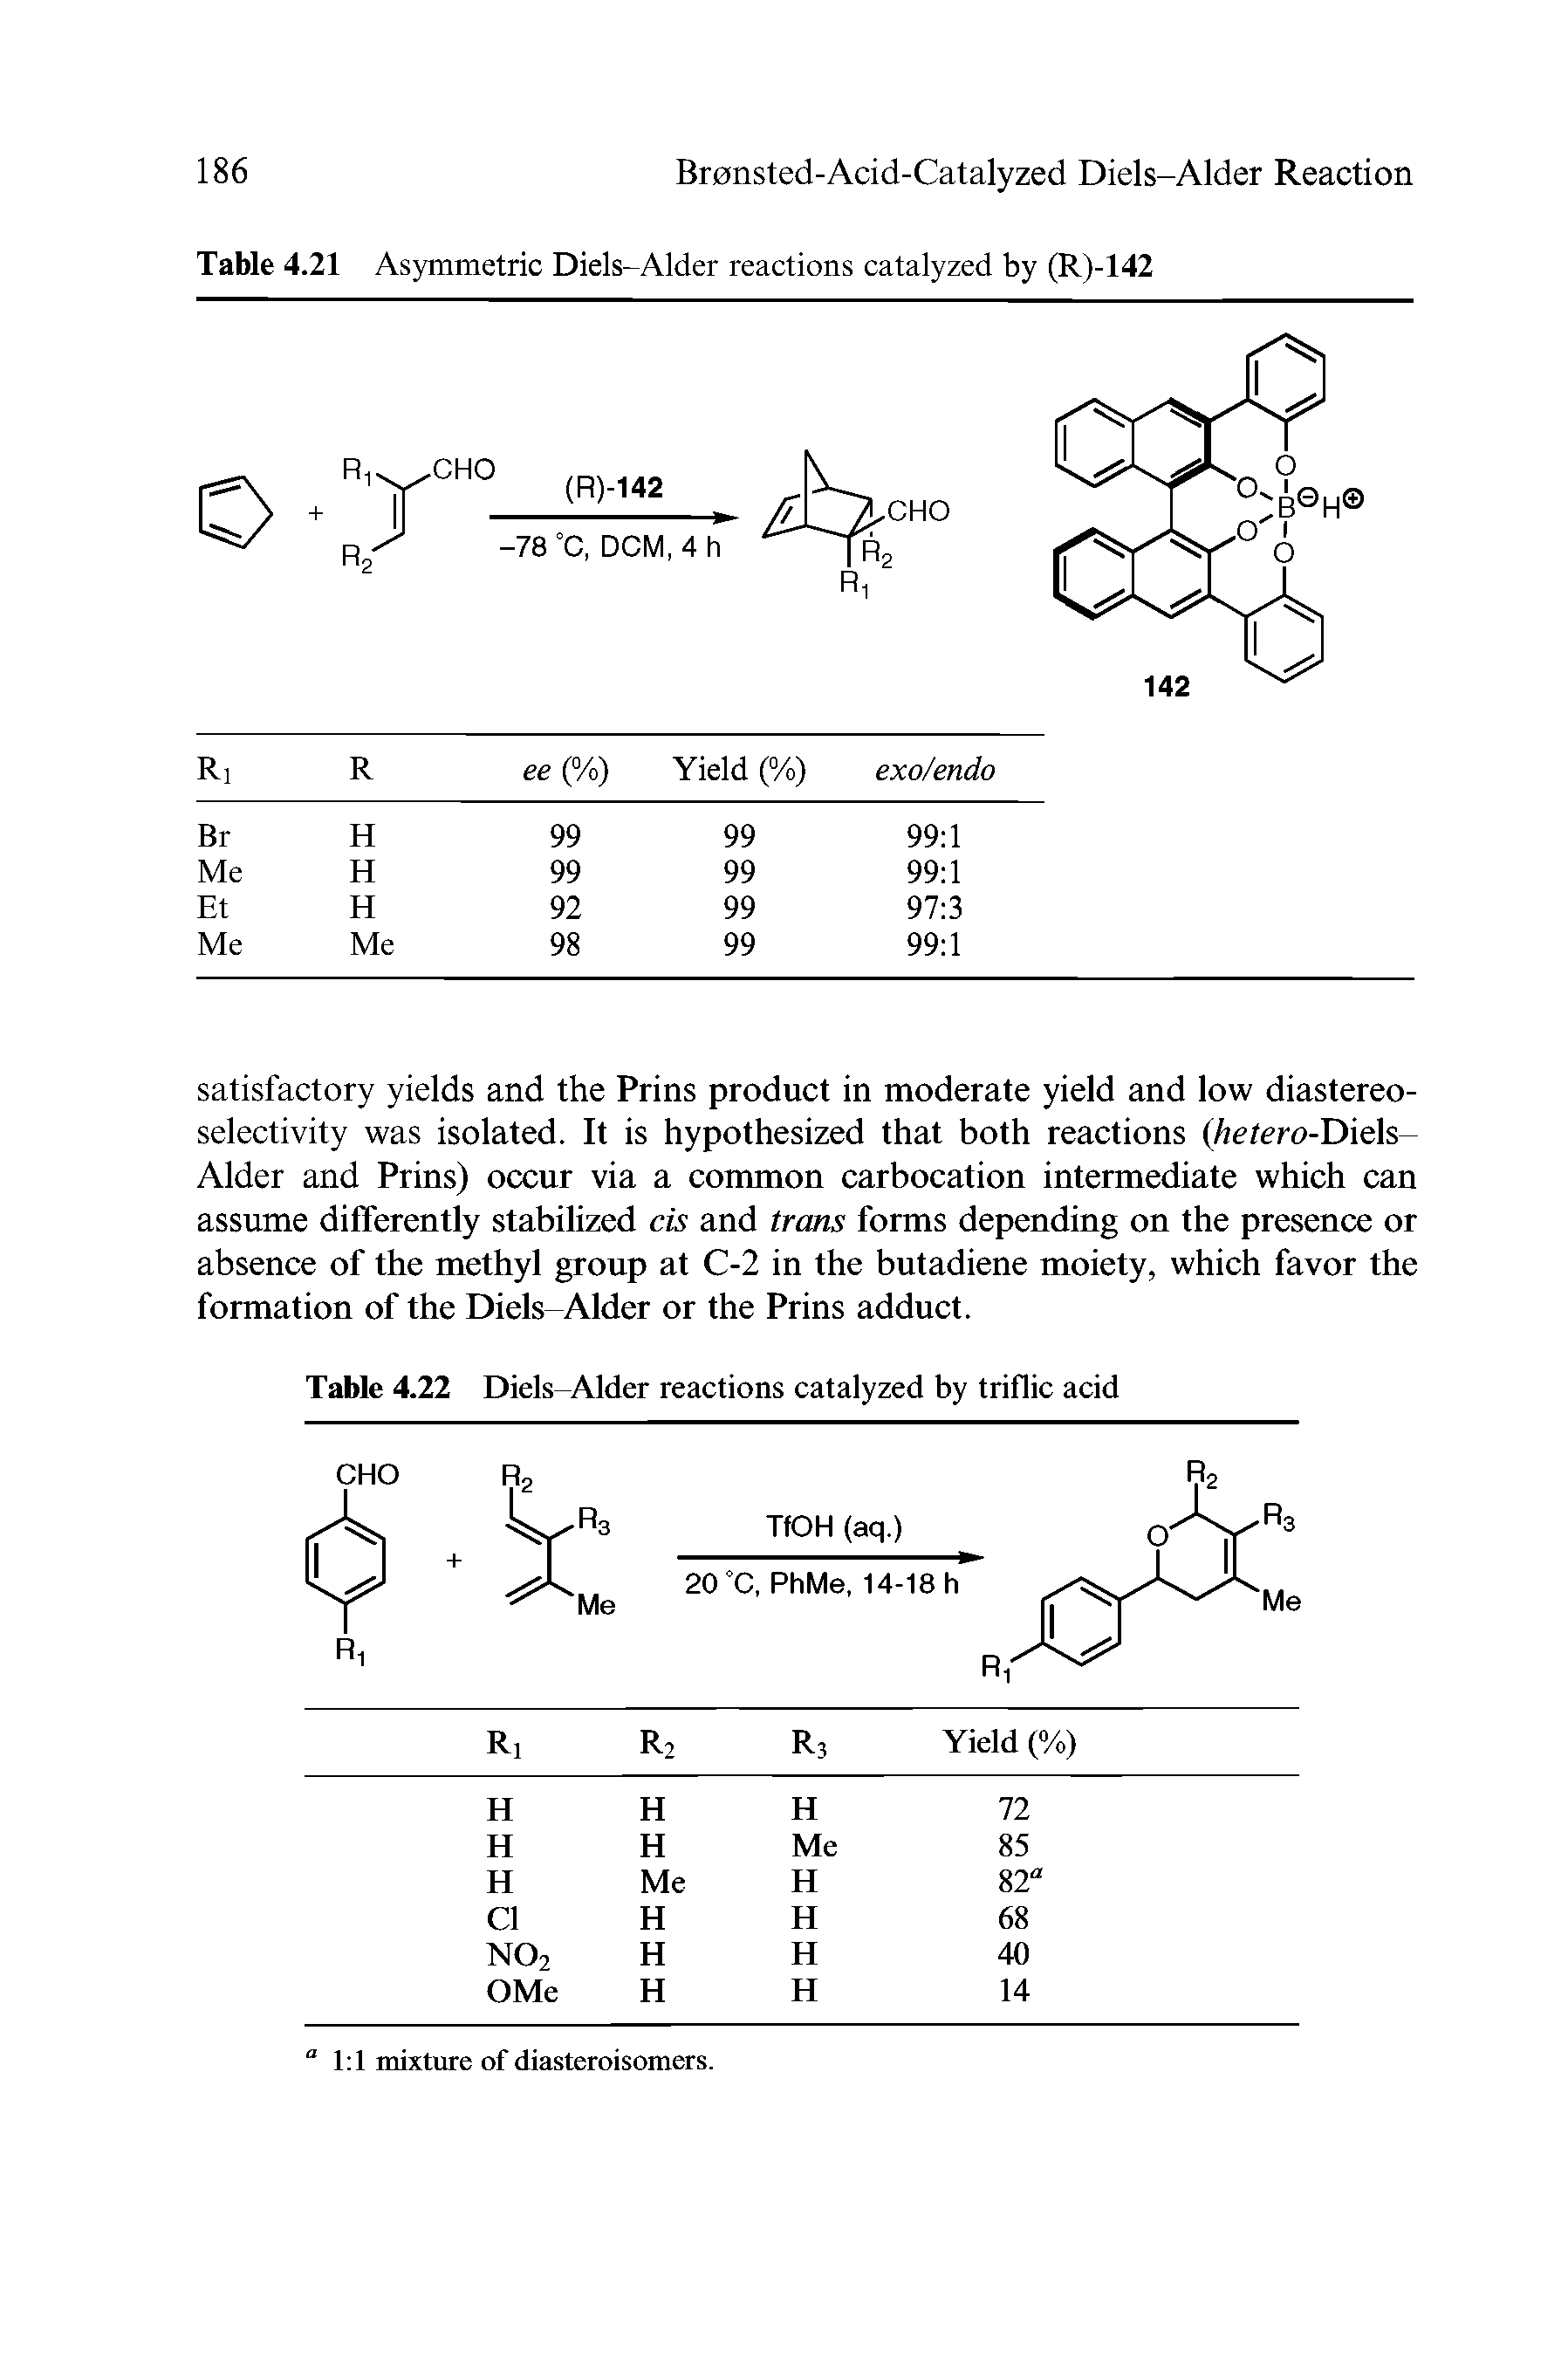 Table 4.22 Diels-Alder reactions catalyzed by triflic acid...